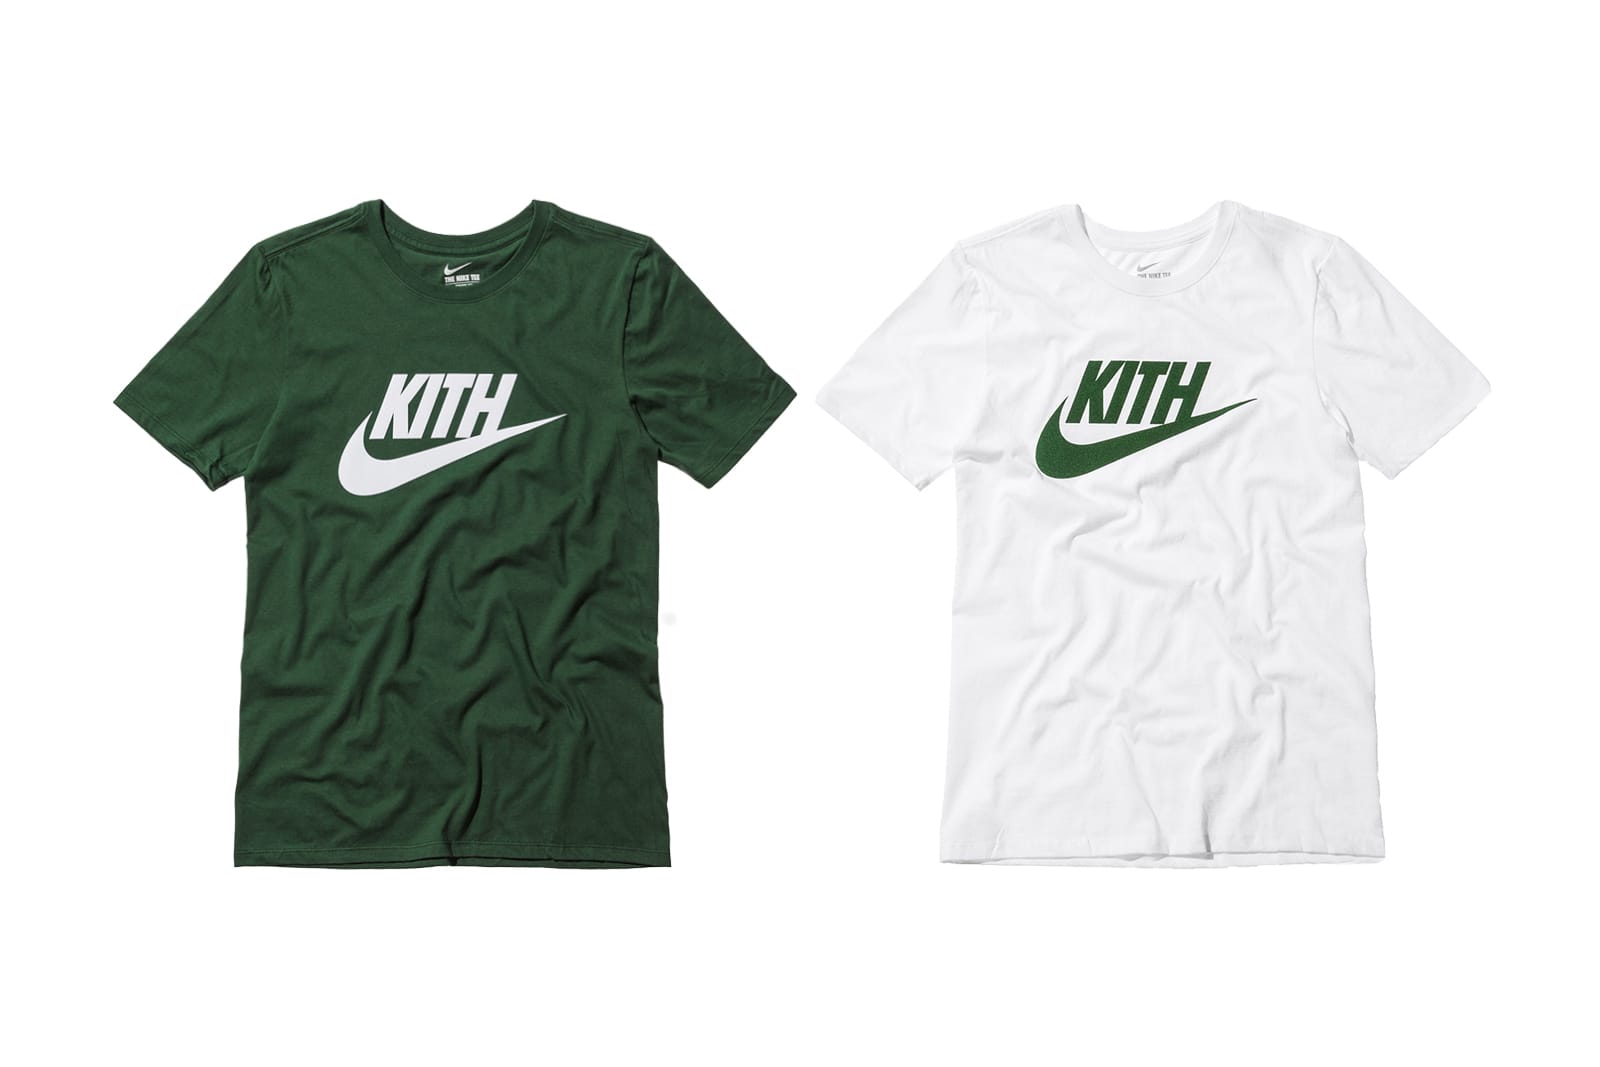 nike t shirt design 2016